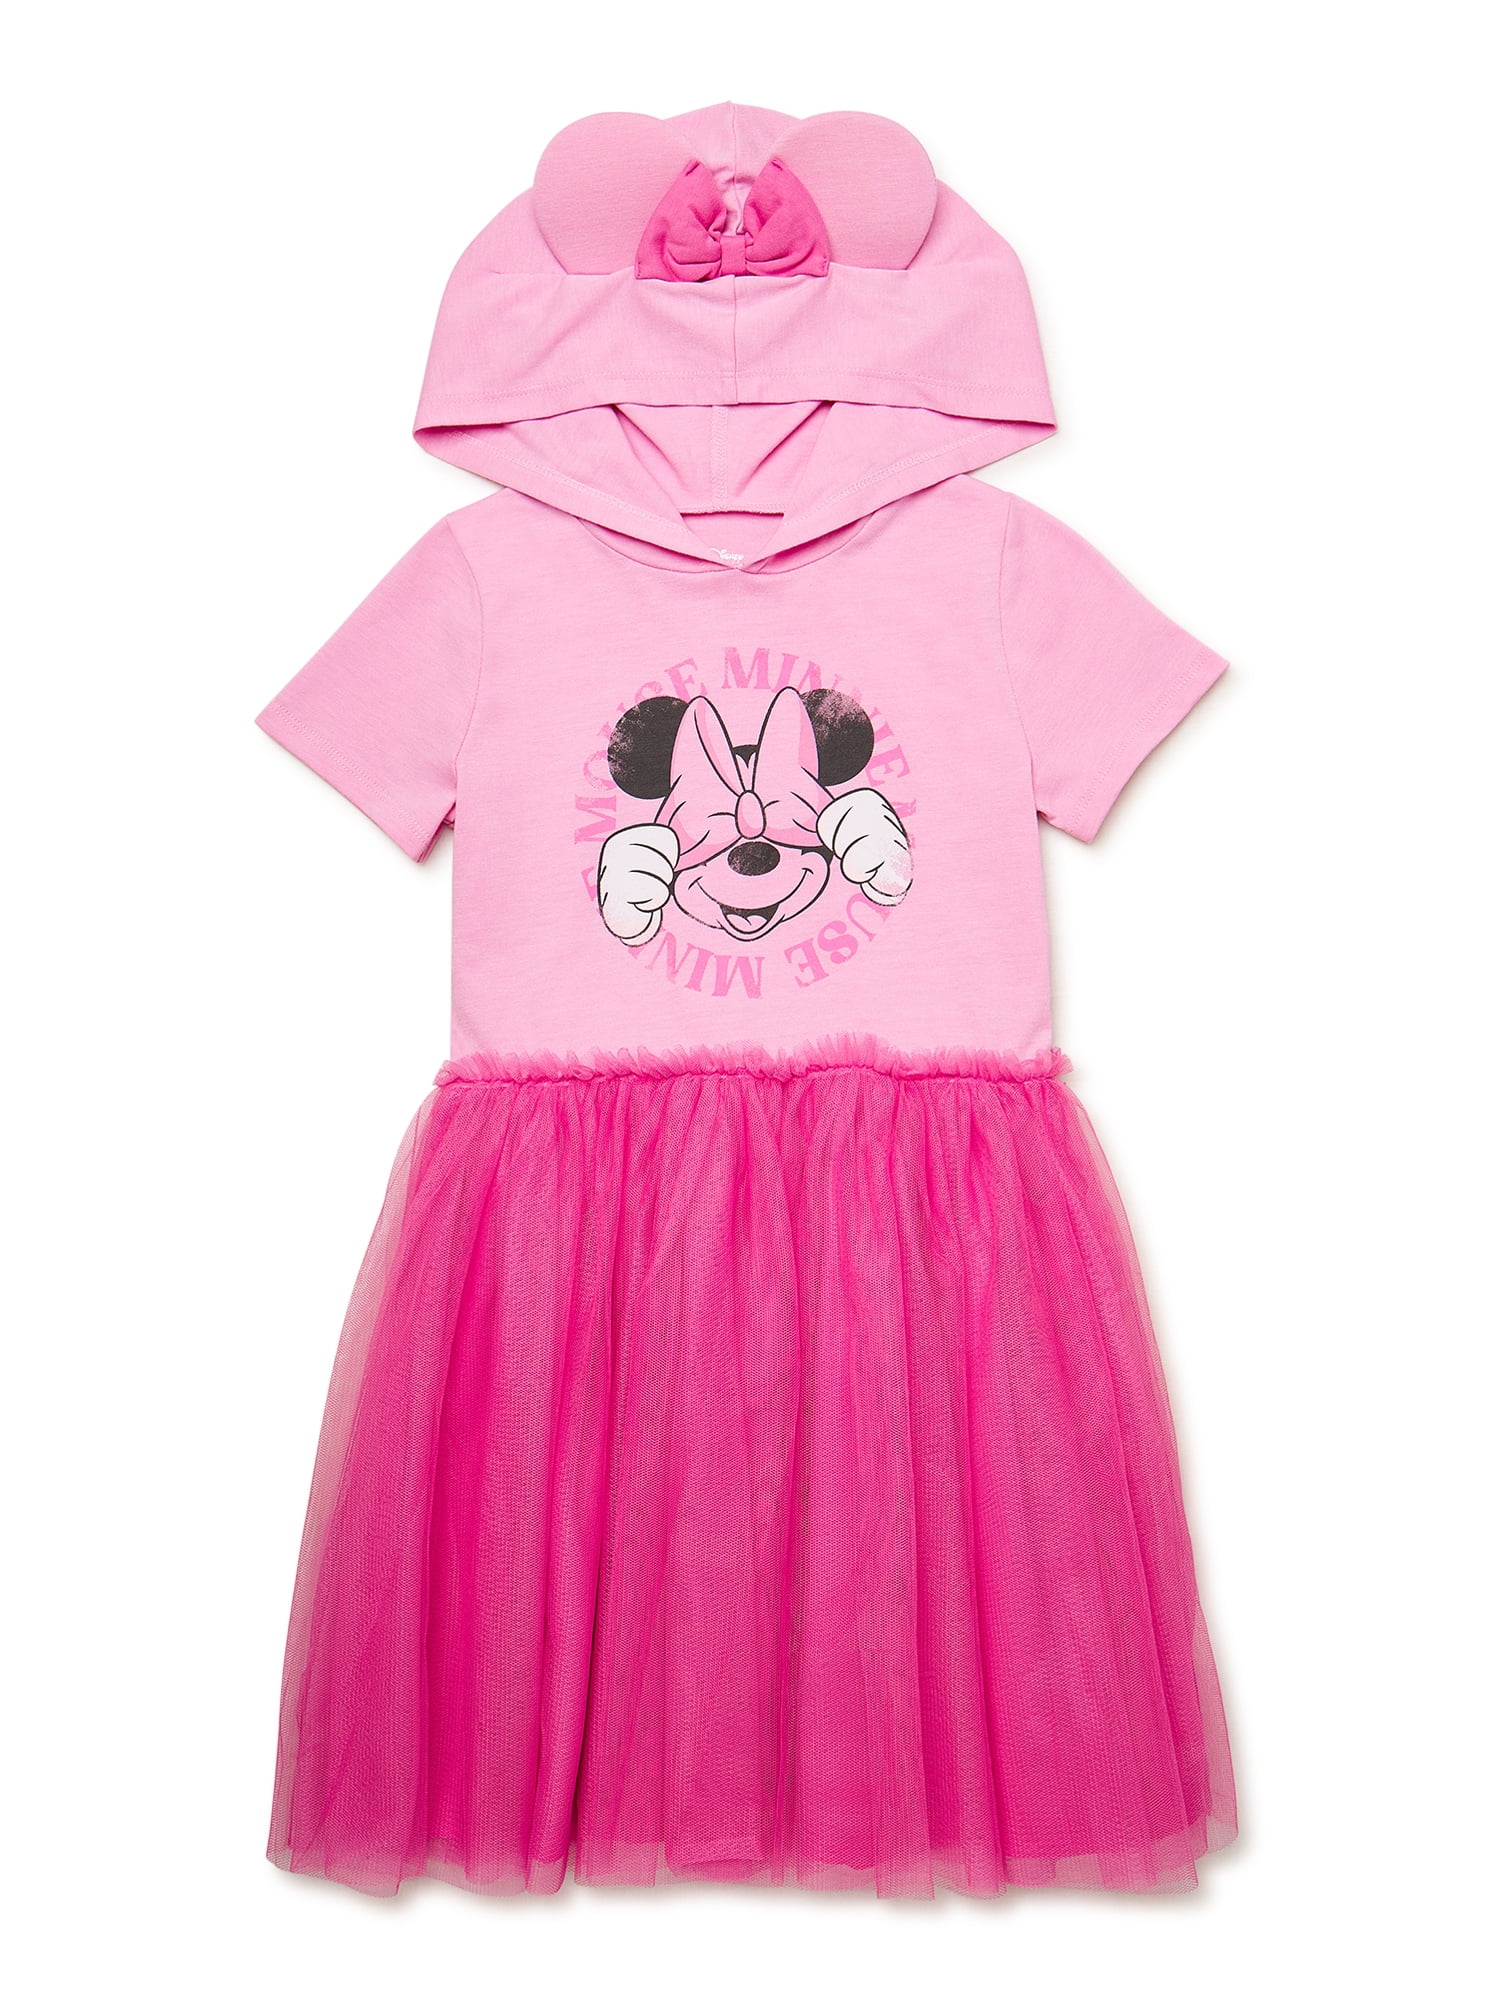 Minnie Mouse Girls Cosplay TuTu Dress with Hood, Sizes 4-12 - Walmart.com